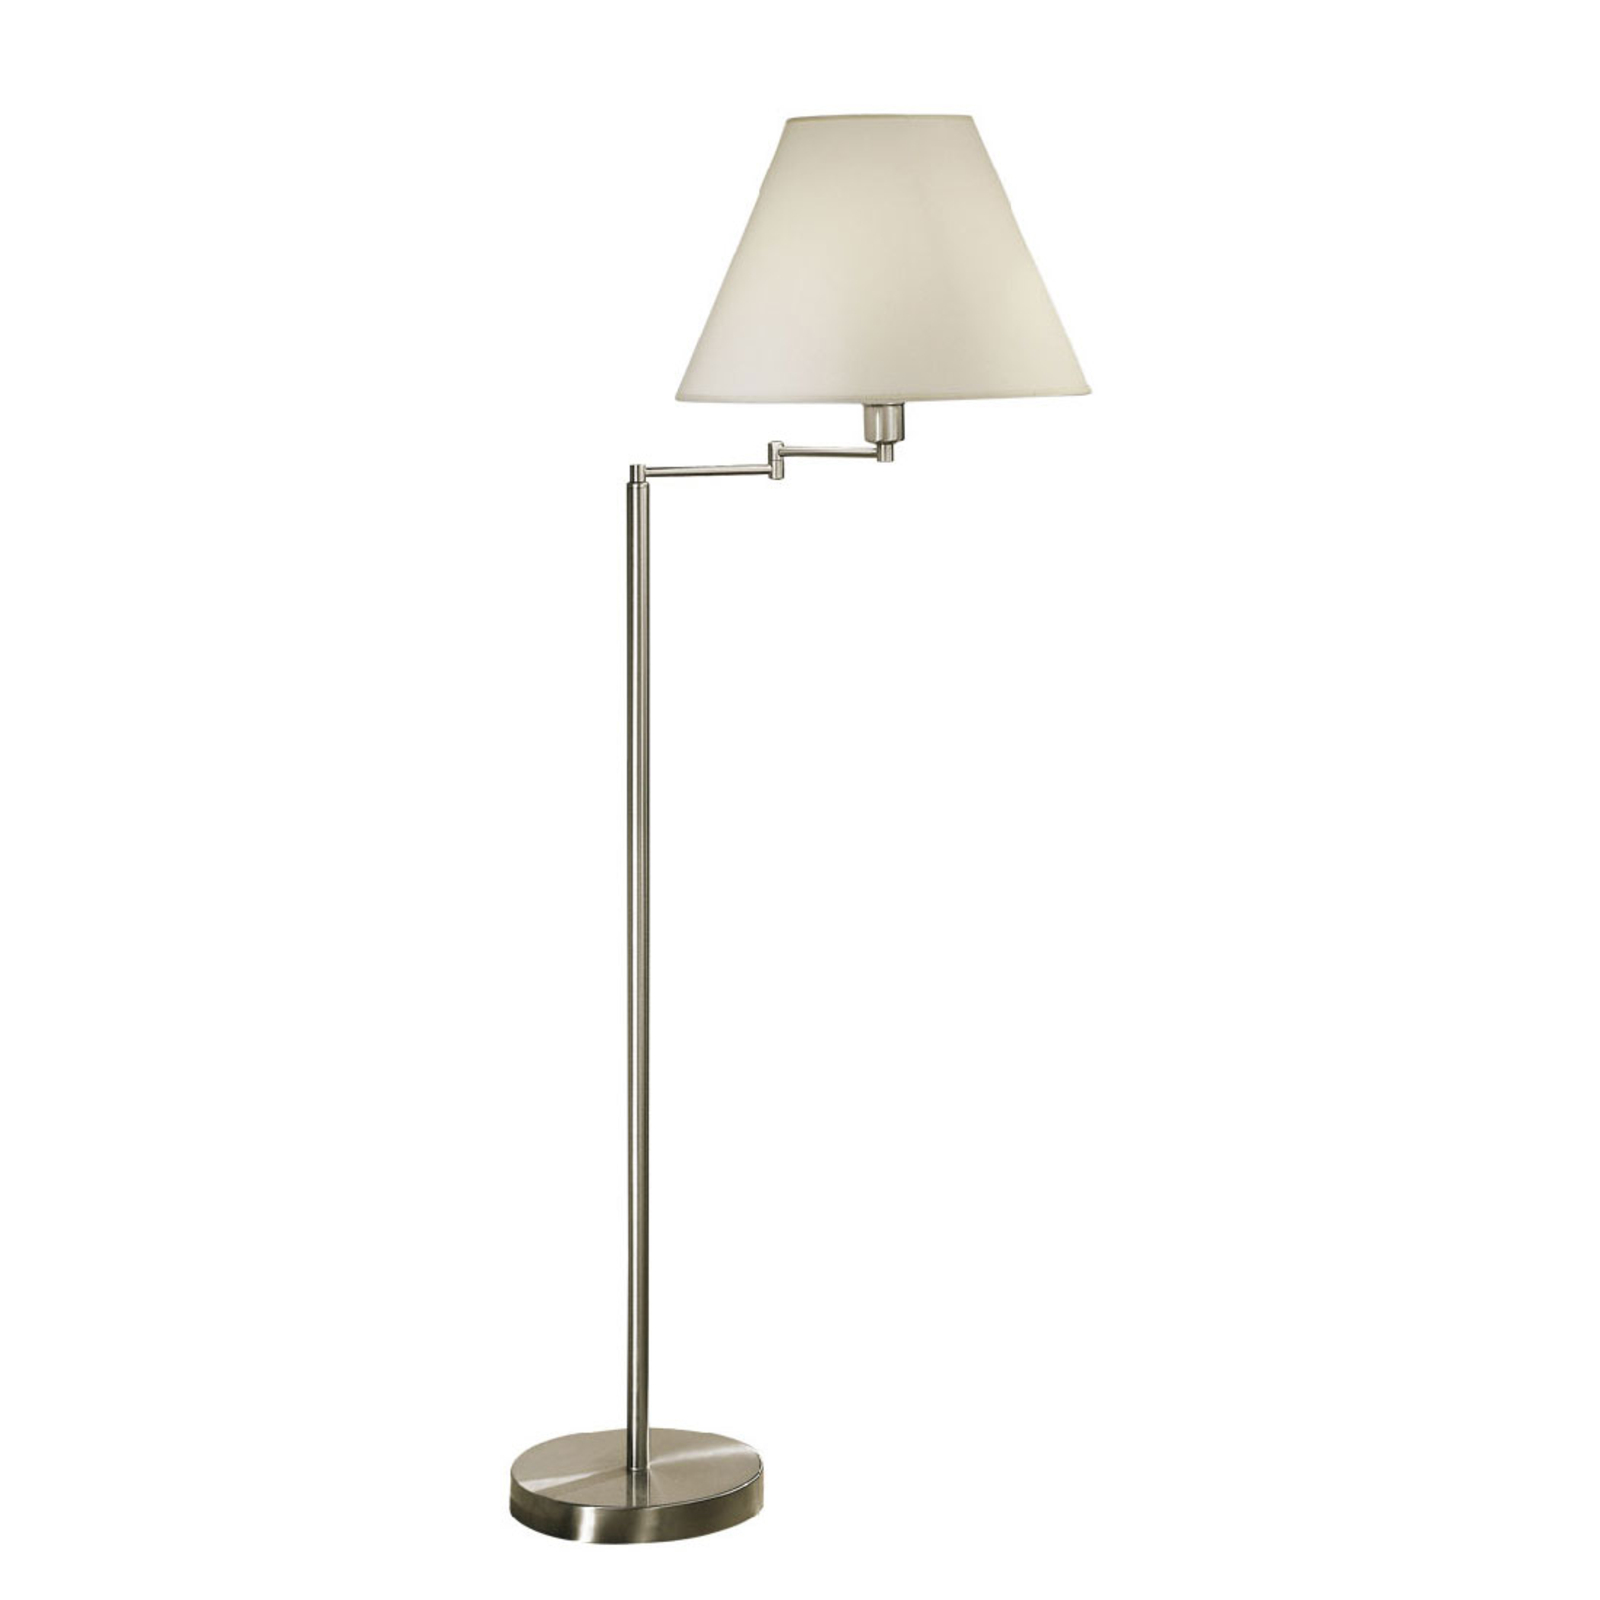 Hilton floor lamp, white fabric lampshade, nickel